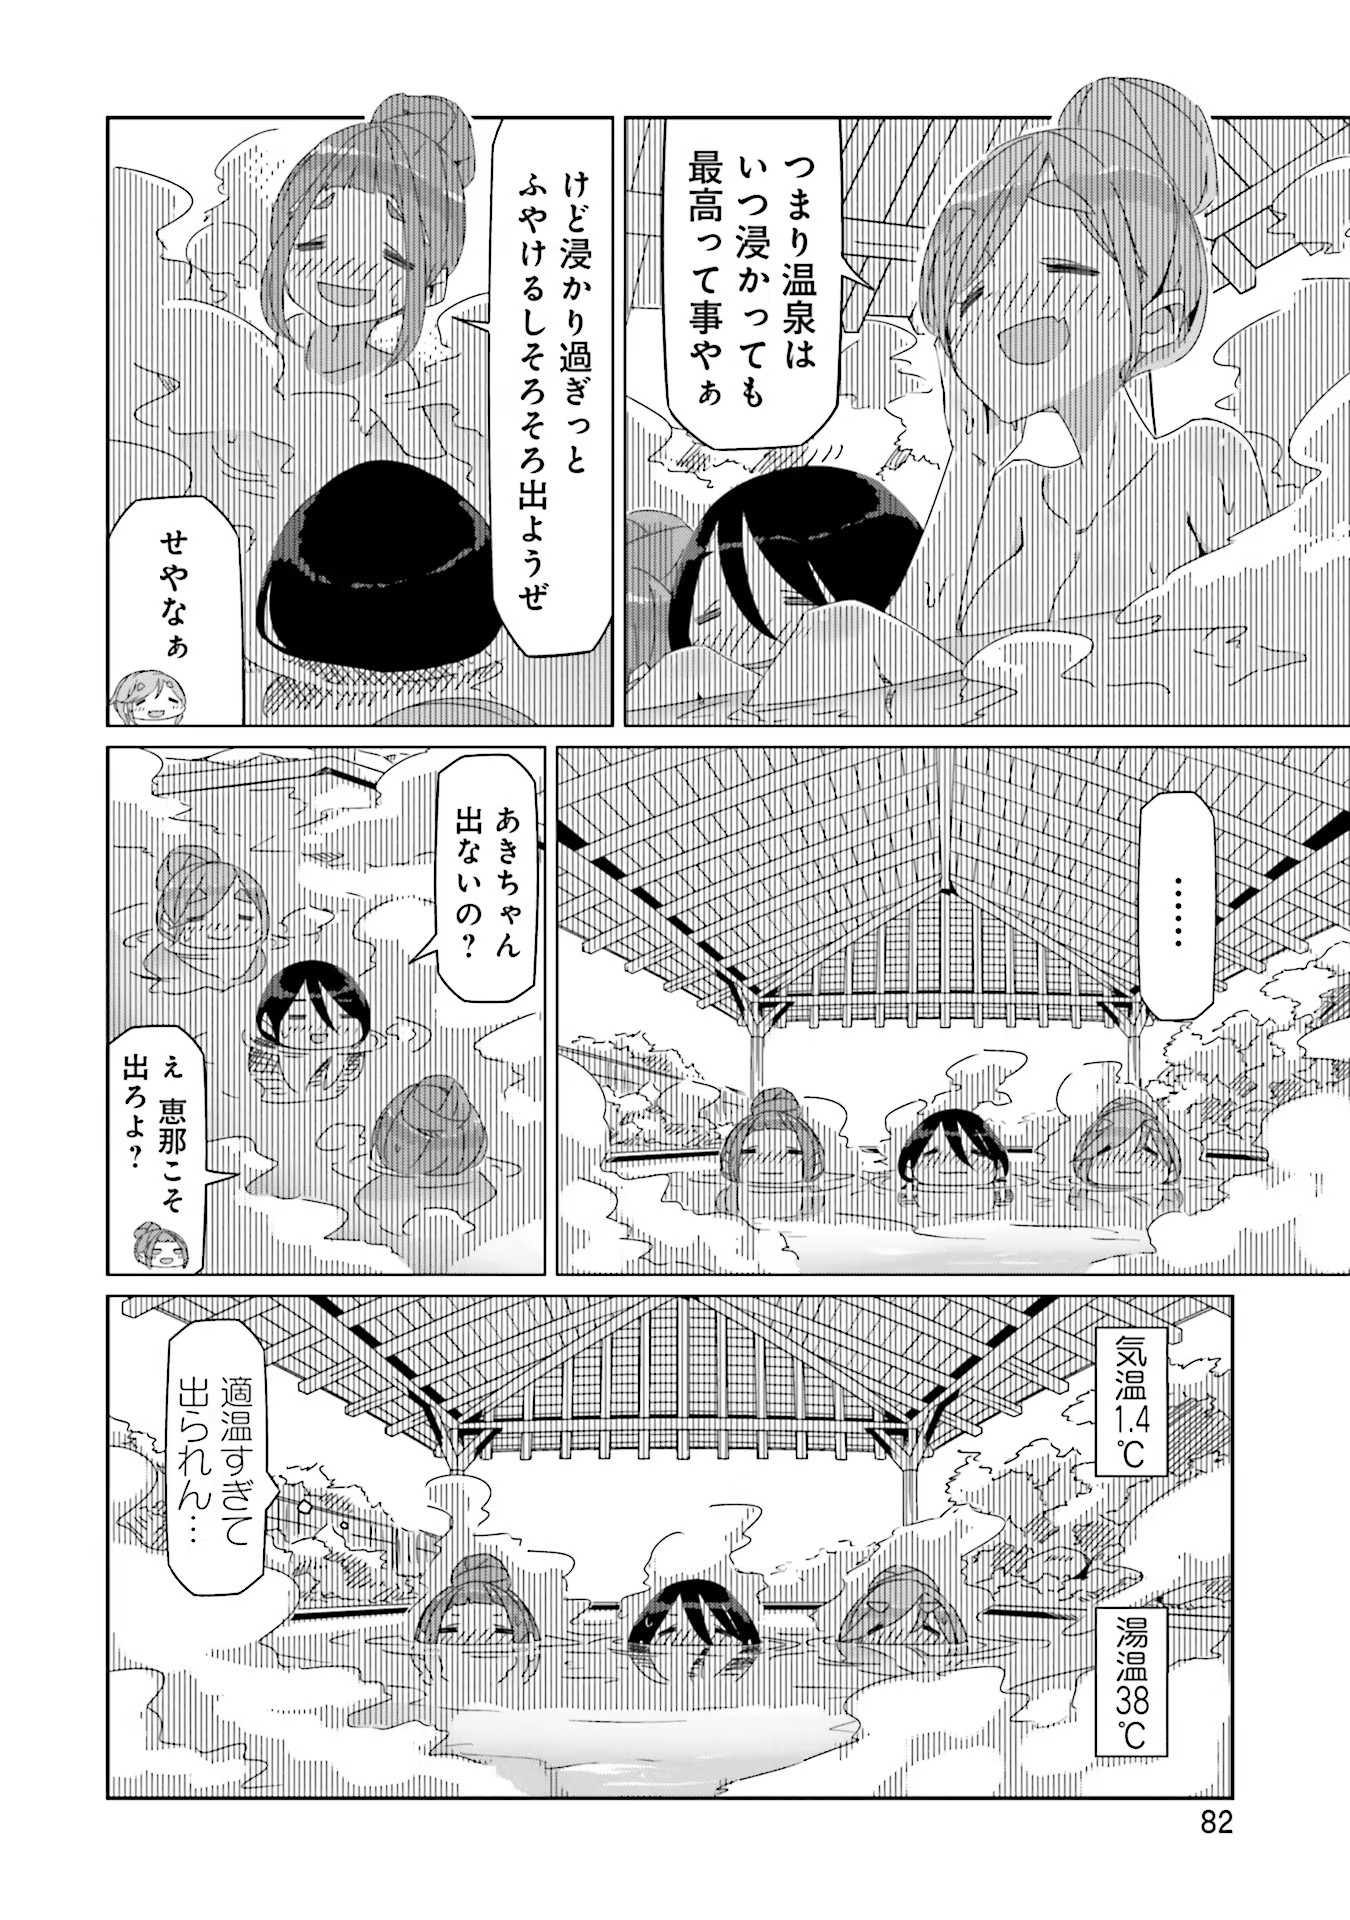 Yuru Camp - Chapter 32 - Page 2